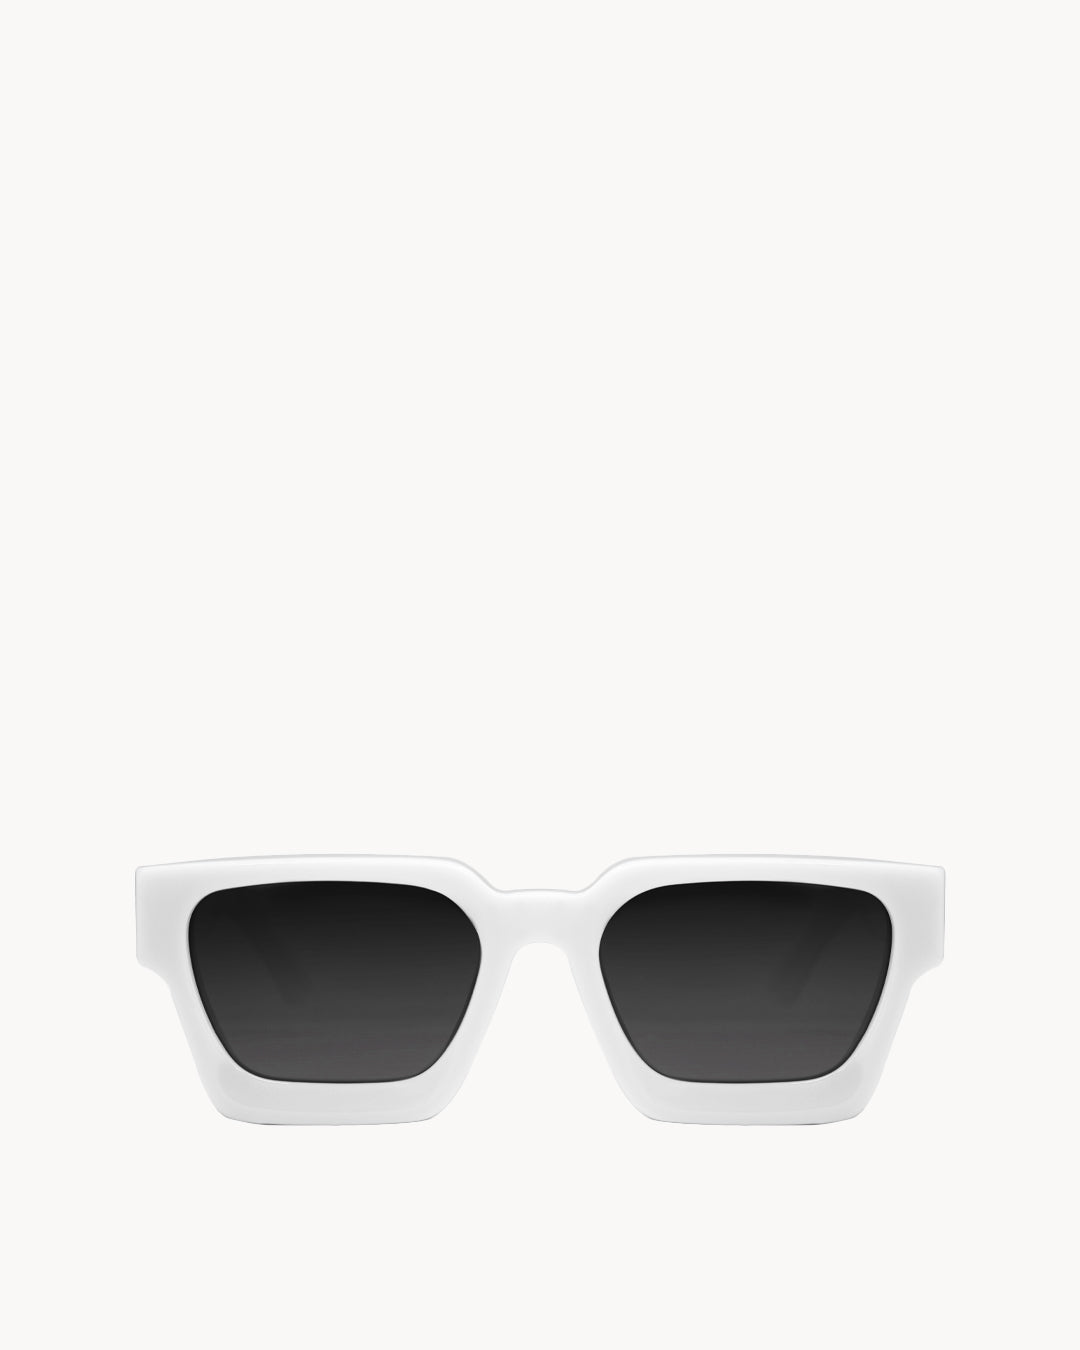 Naxxar Glowing White Sunglasses